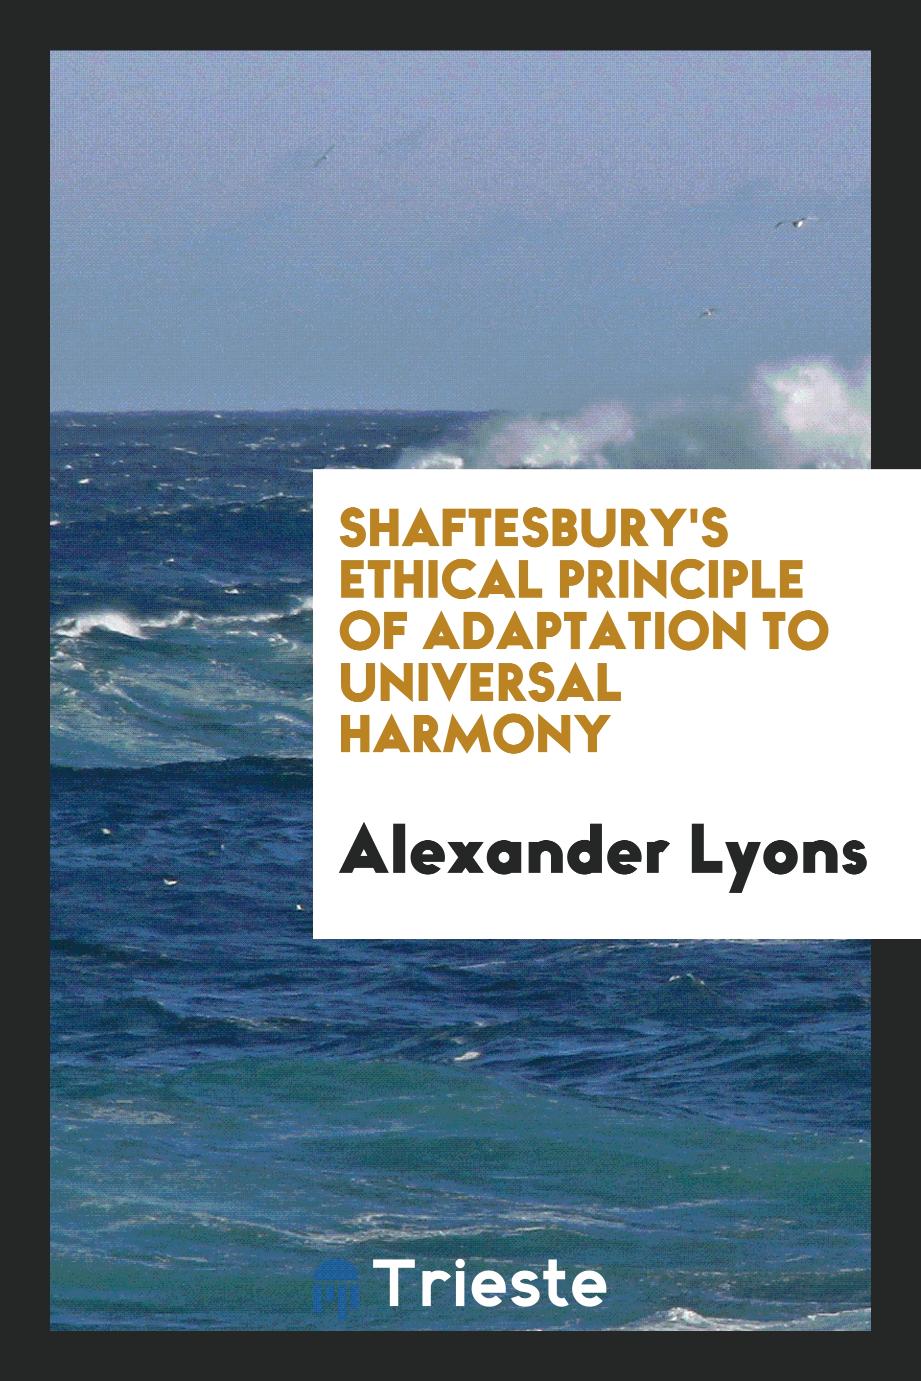 Shaftesbury's ethical principle of adaptation to universal harmony